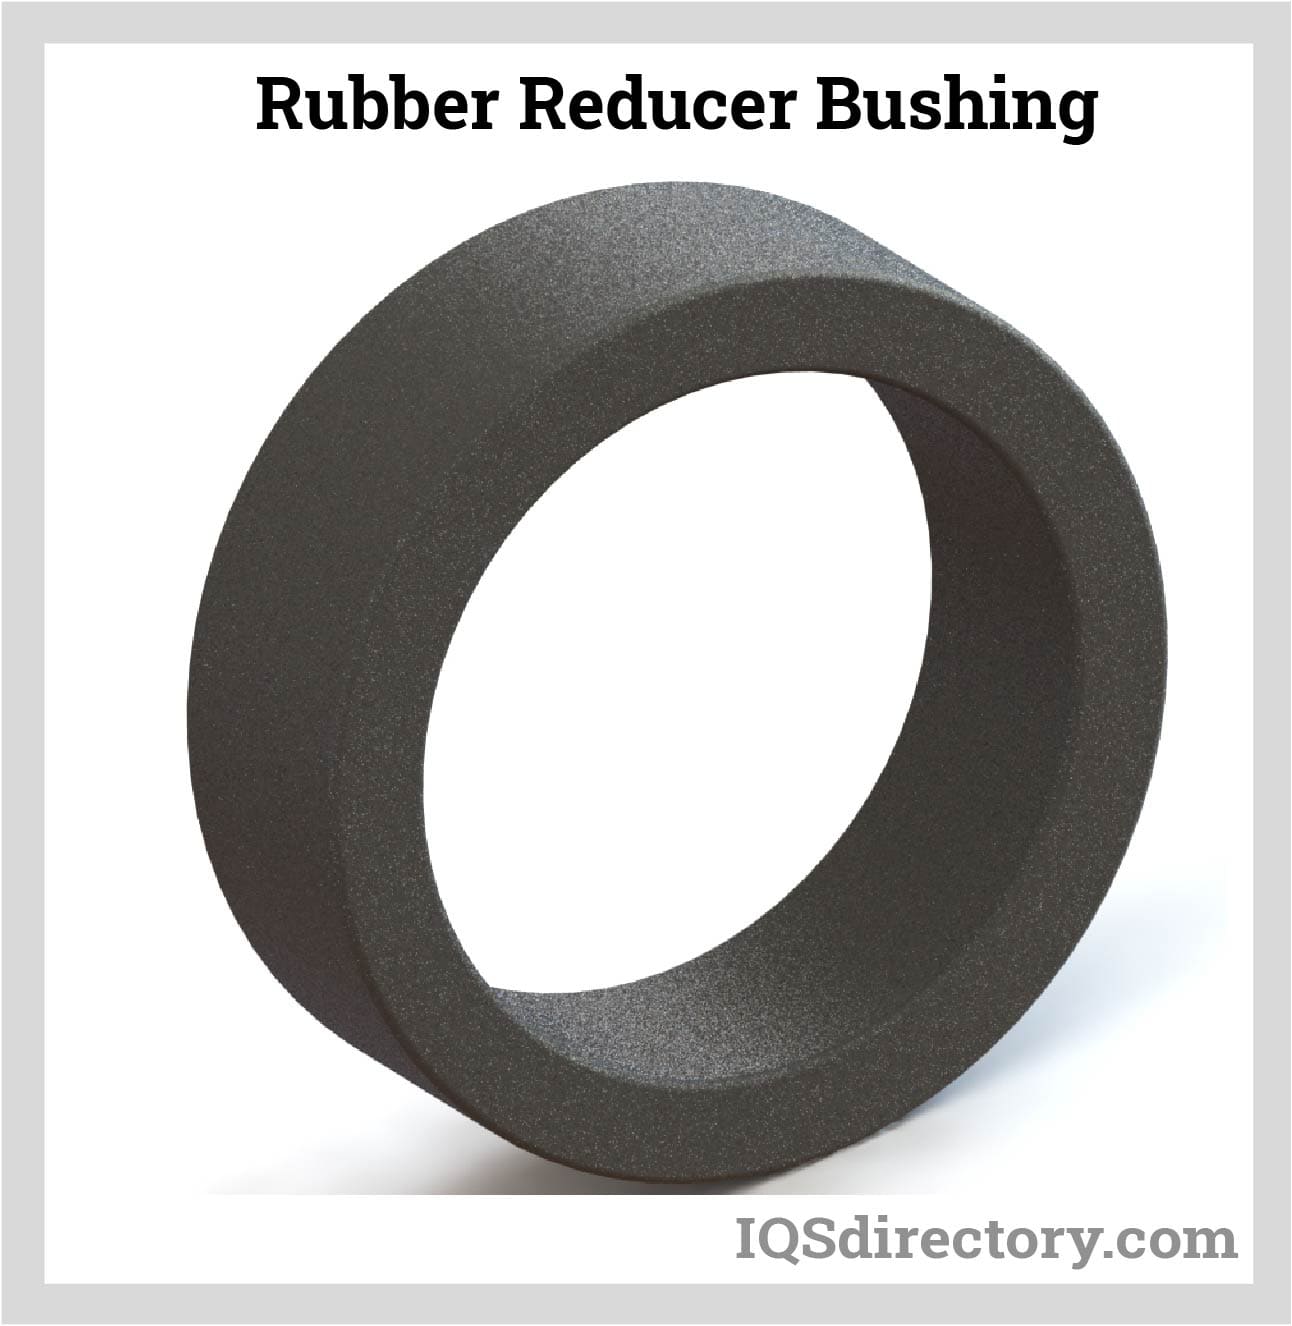 Rubber Reducer Bushing